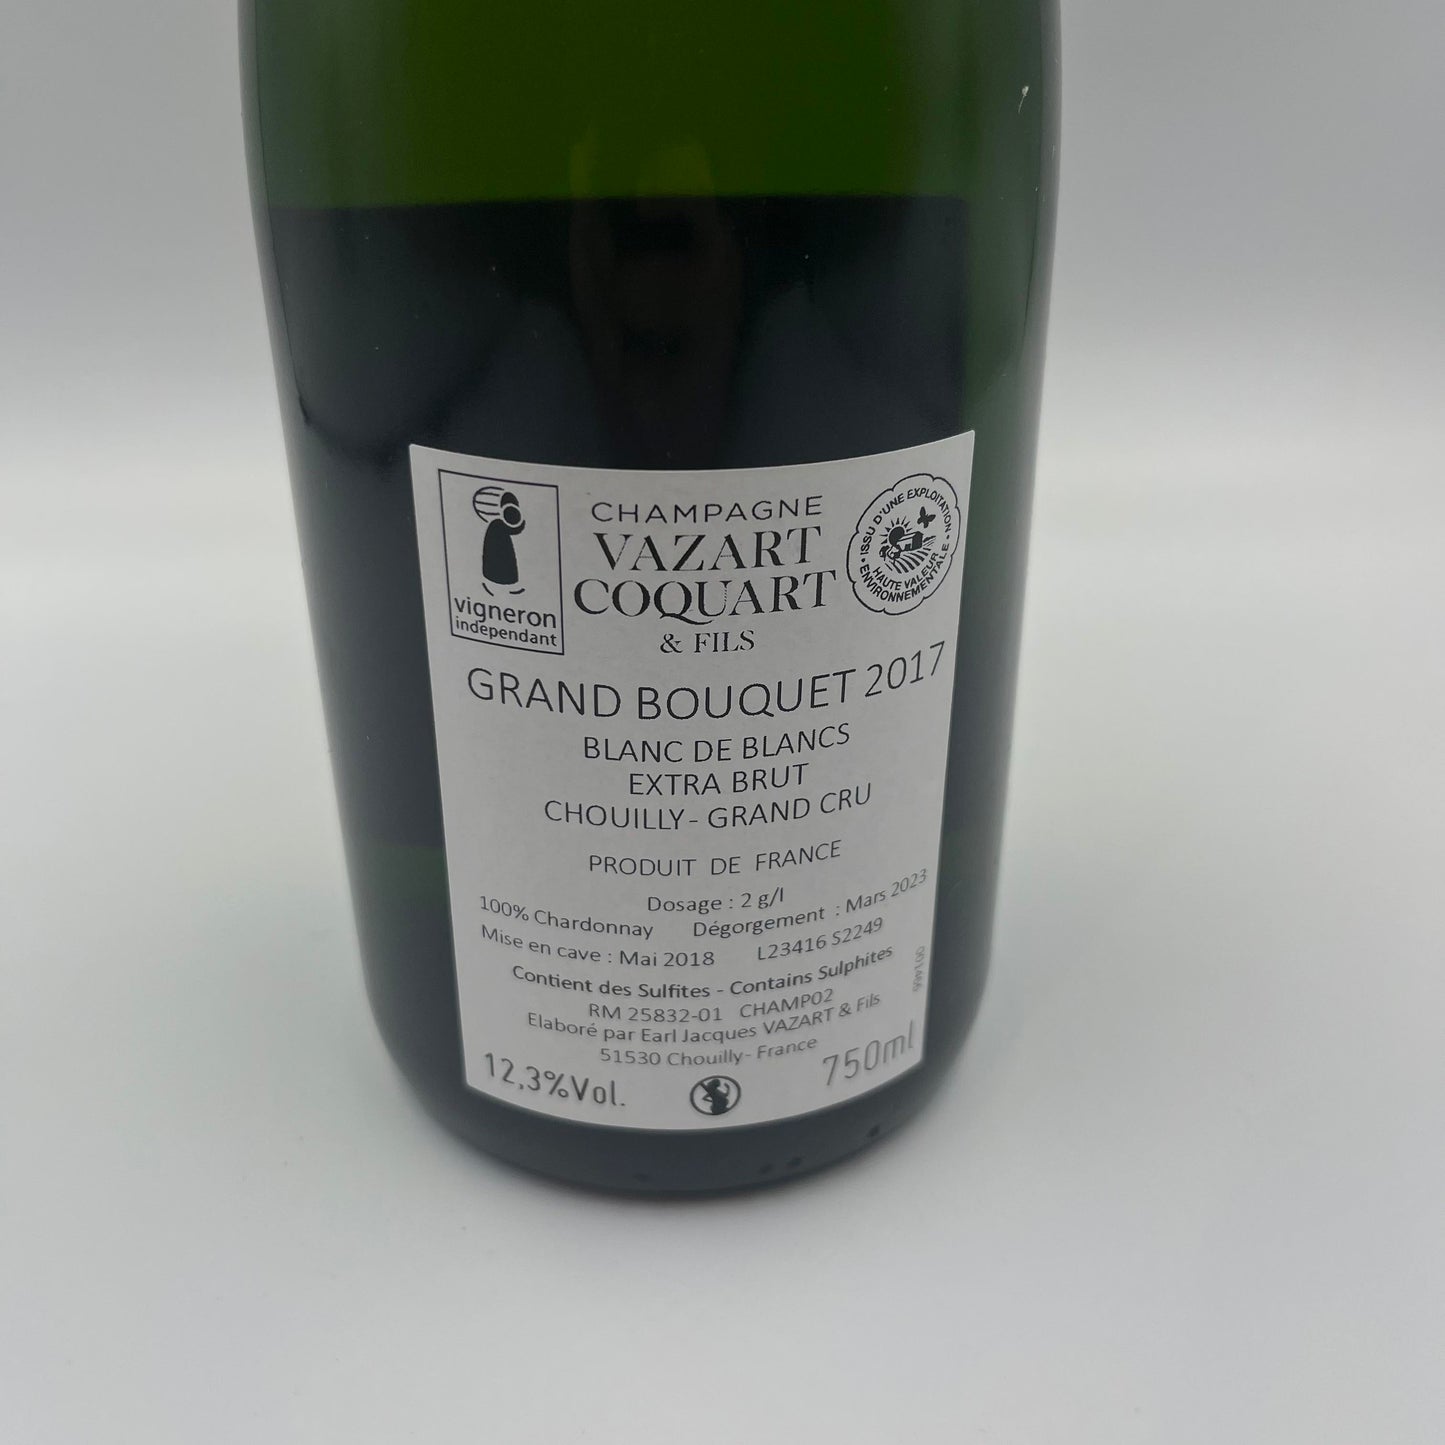 Vazart Coquart Grand Bouquet 2017